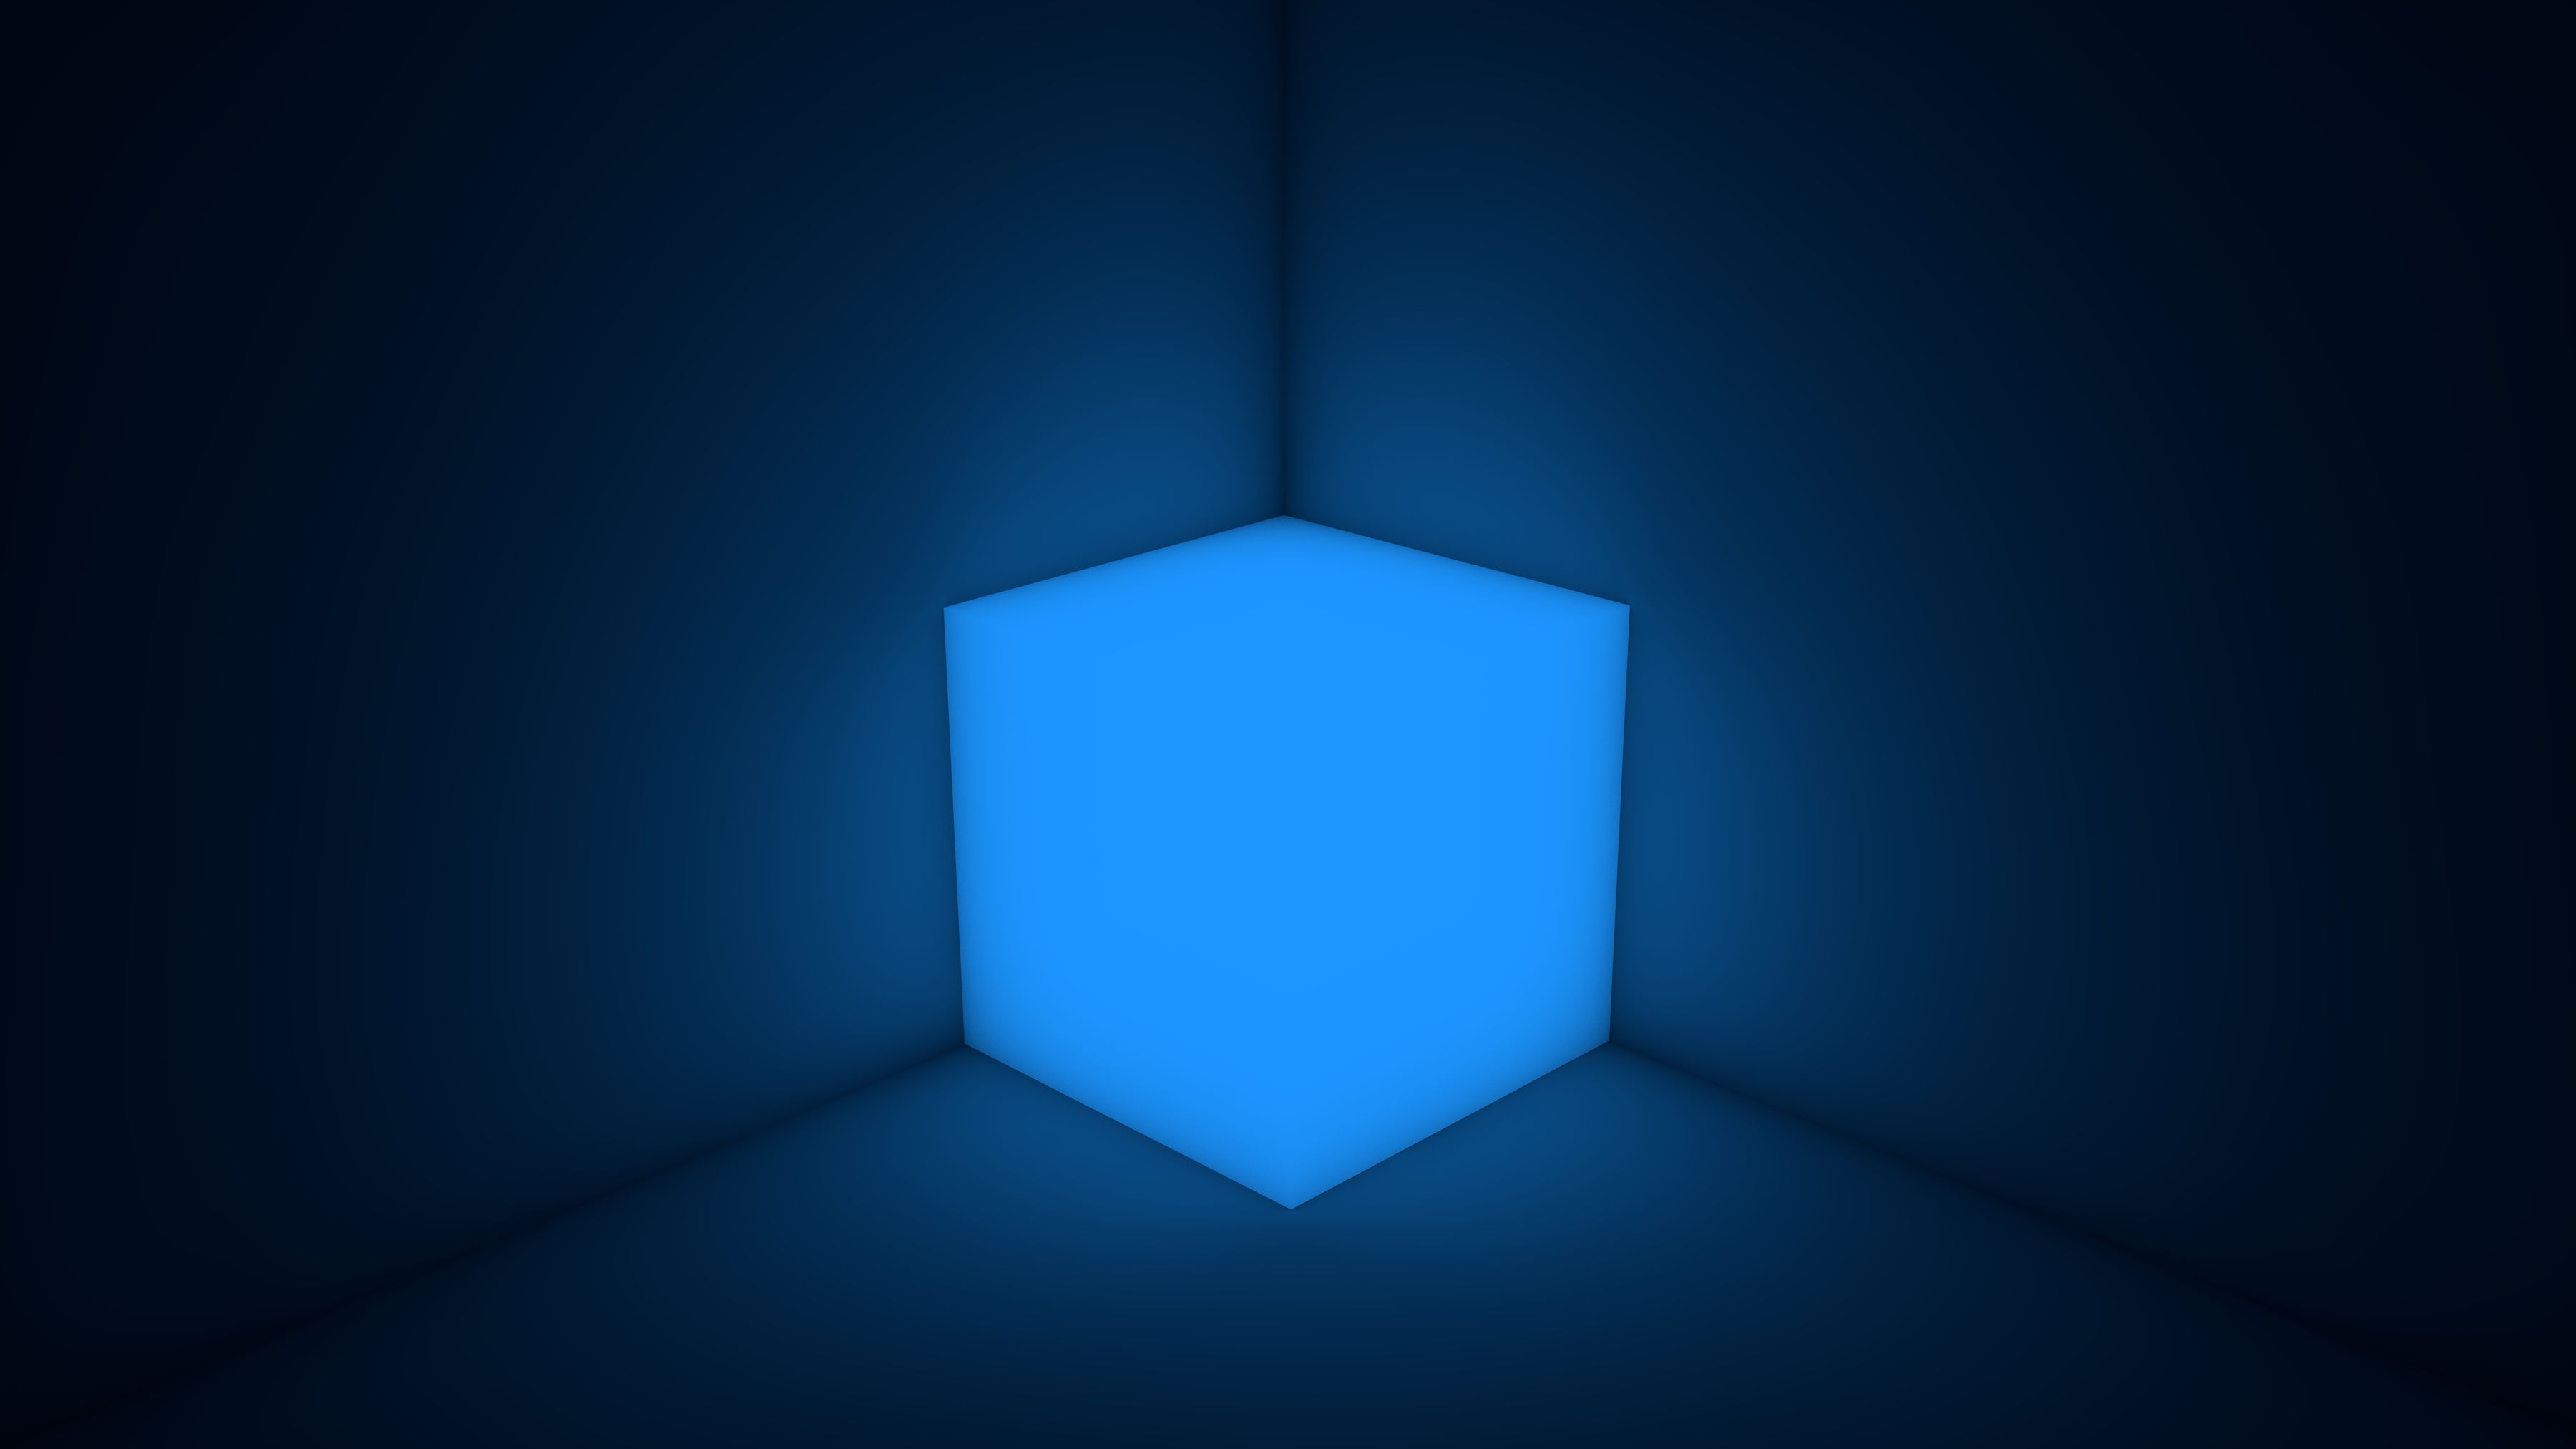 cube, 3d, form, neon, backlight, illumination wallpaper for mobile